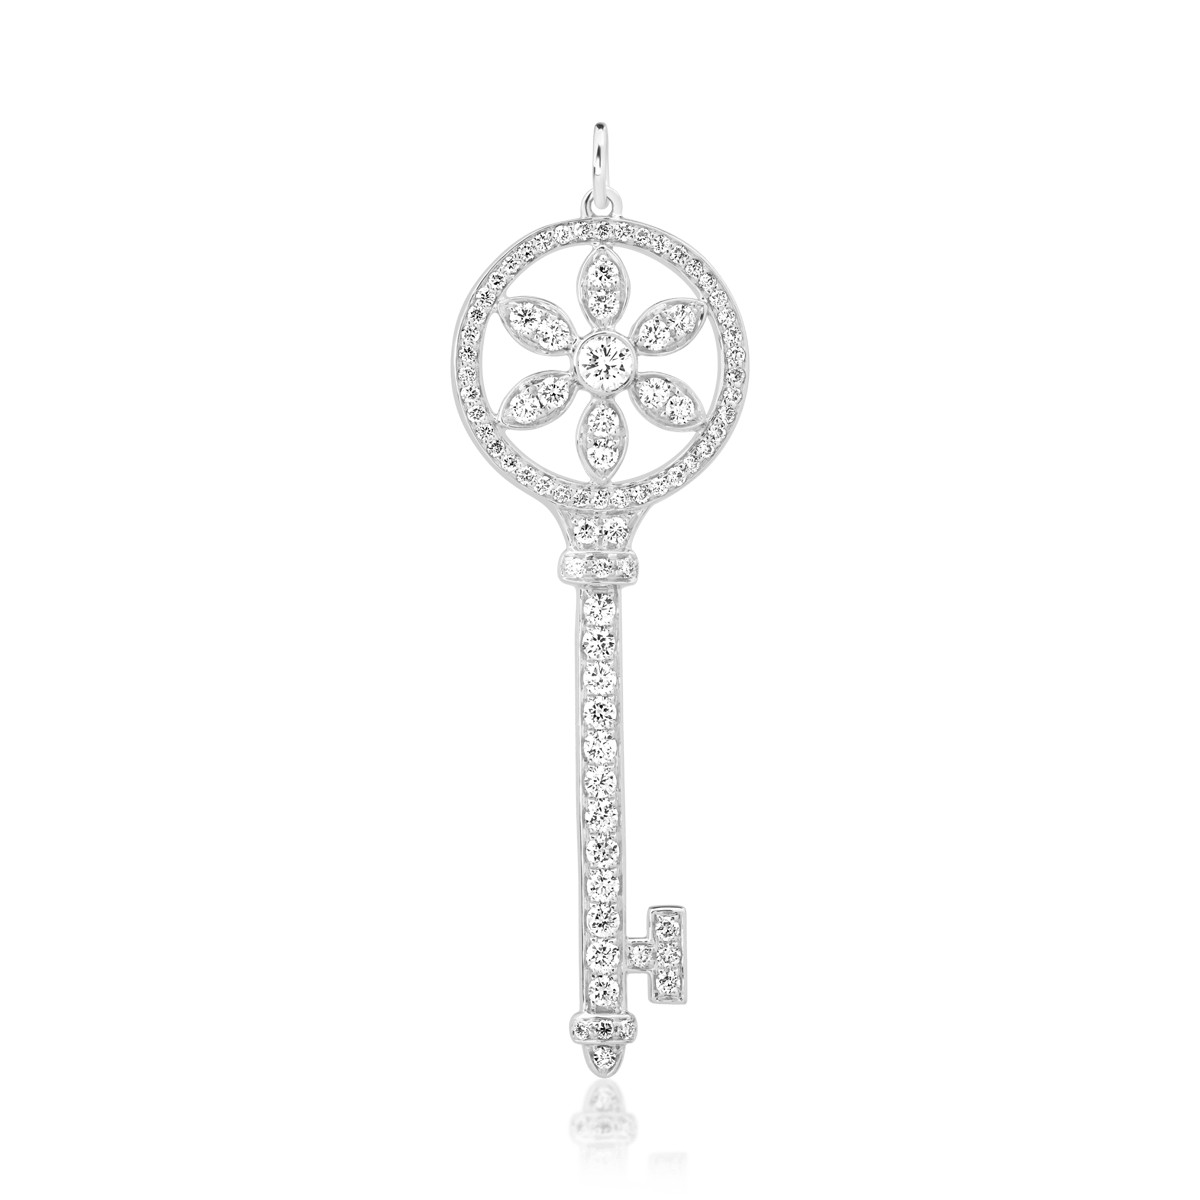 18K white gold key pendant with 0.11ct diamond and 0.78ct diamonds